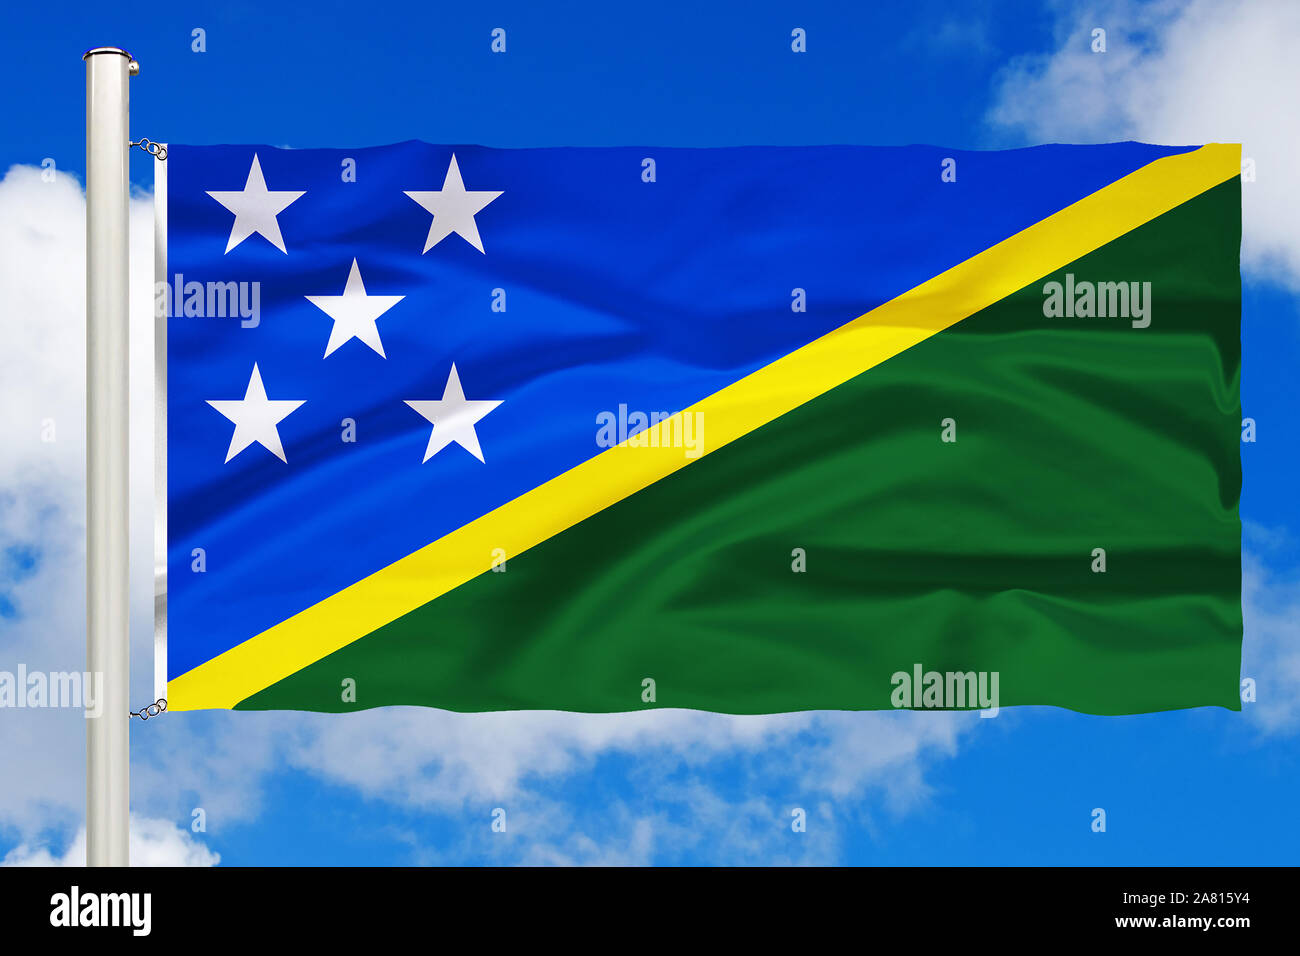 Nationalfahne Nationalflagge, Fahne Flagge,,,,, Südpazifik Inselstaat Salomonen, Südsee, Cumulus Wolken vor blauen Himmel, Banque D'Images